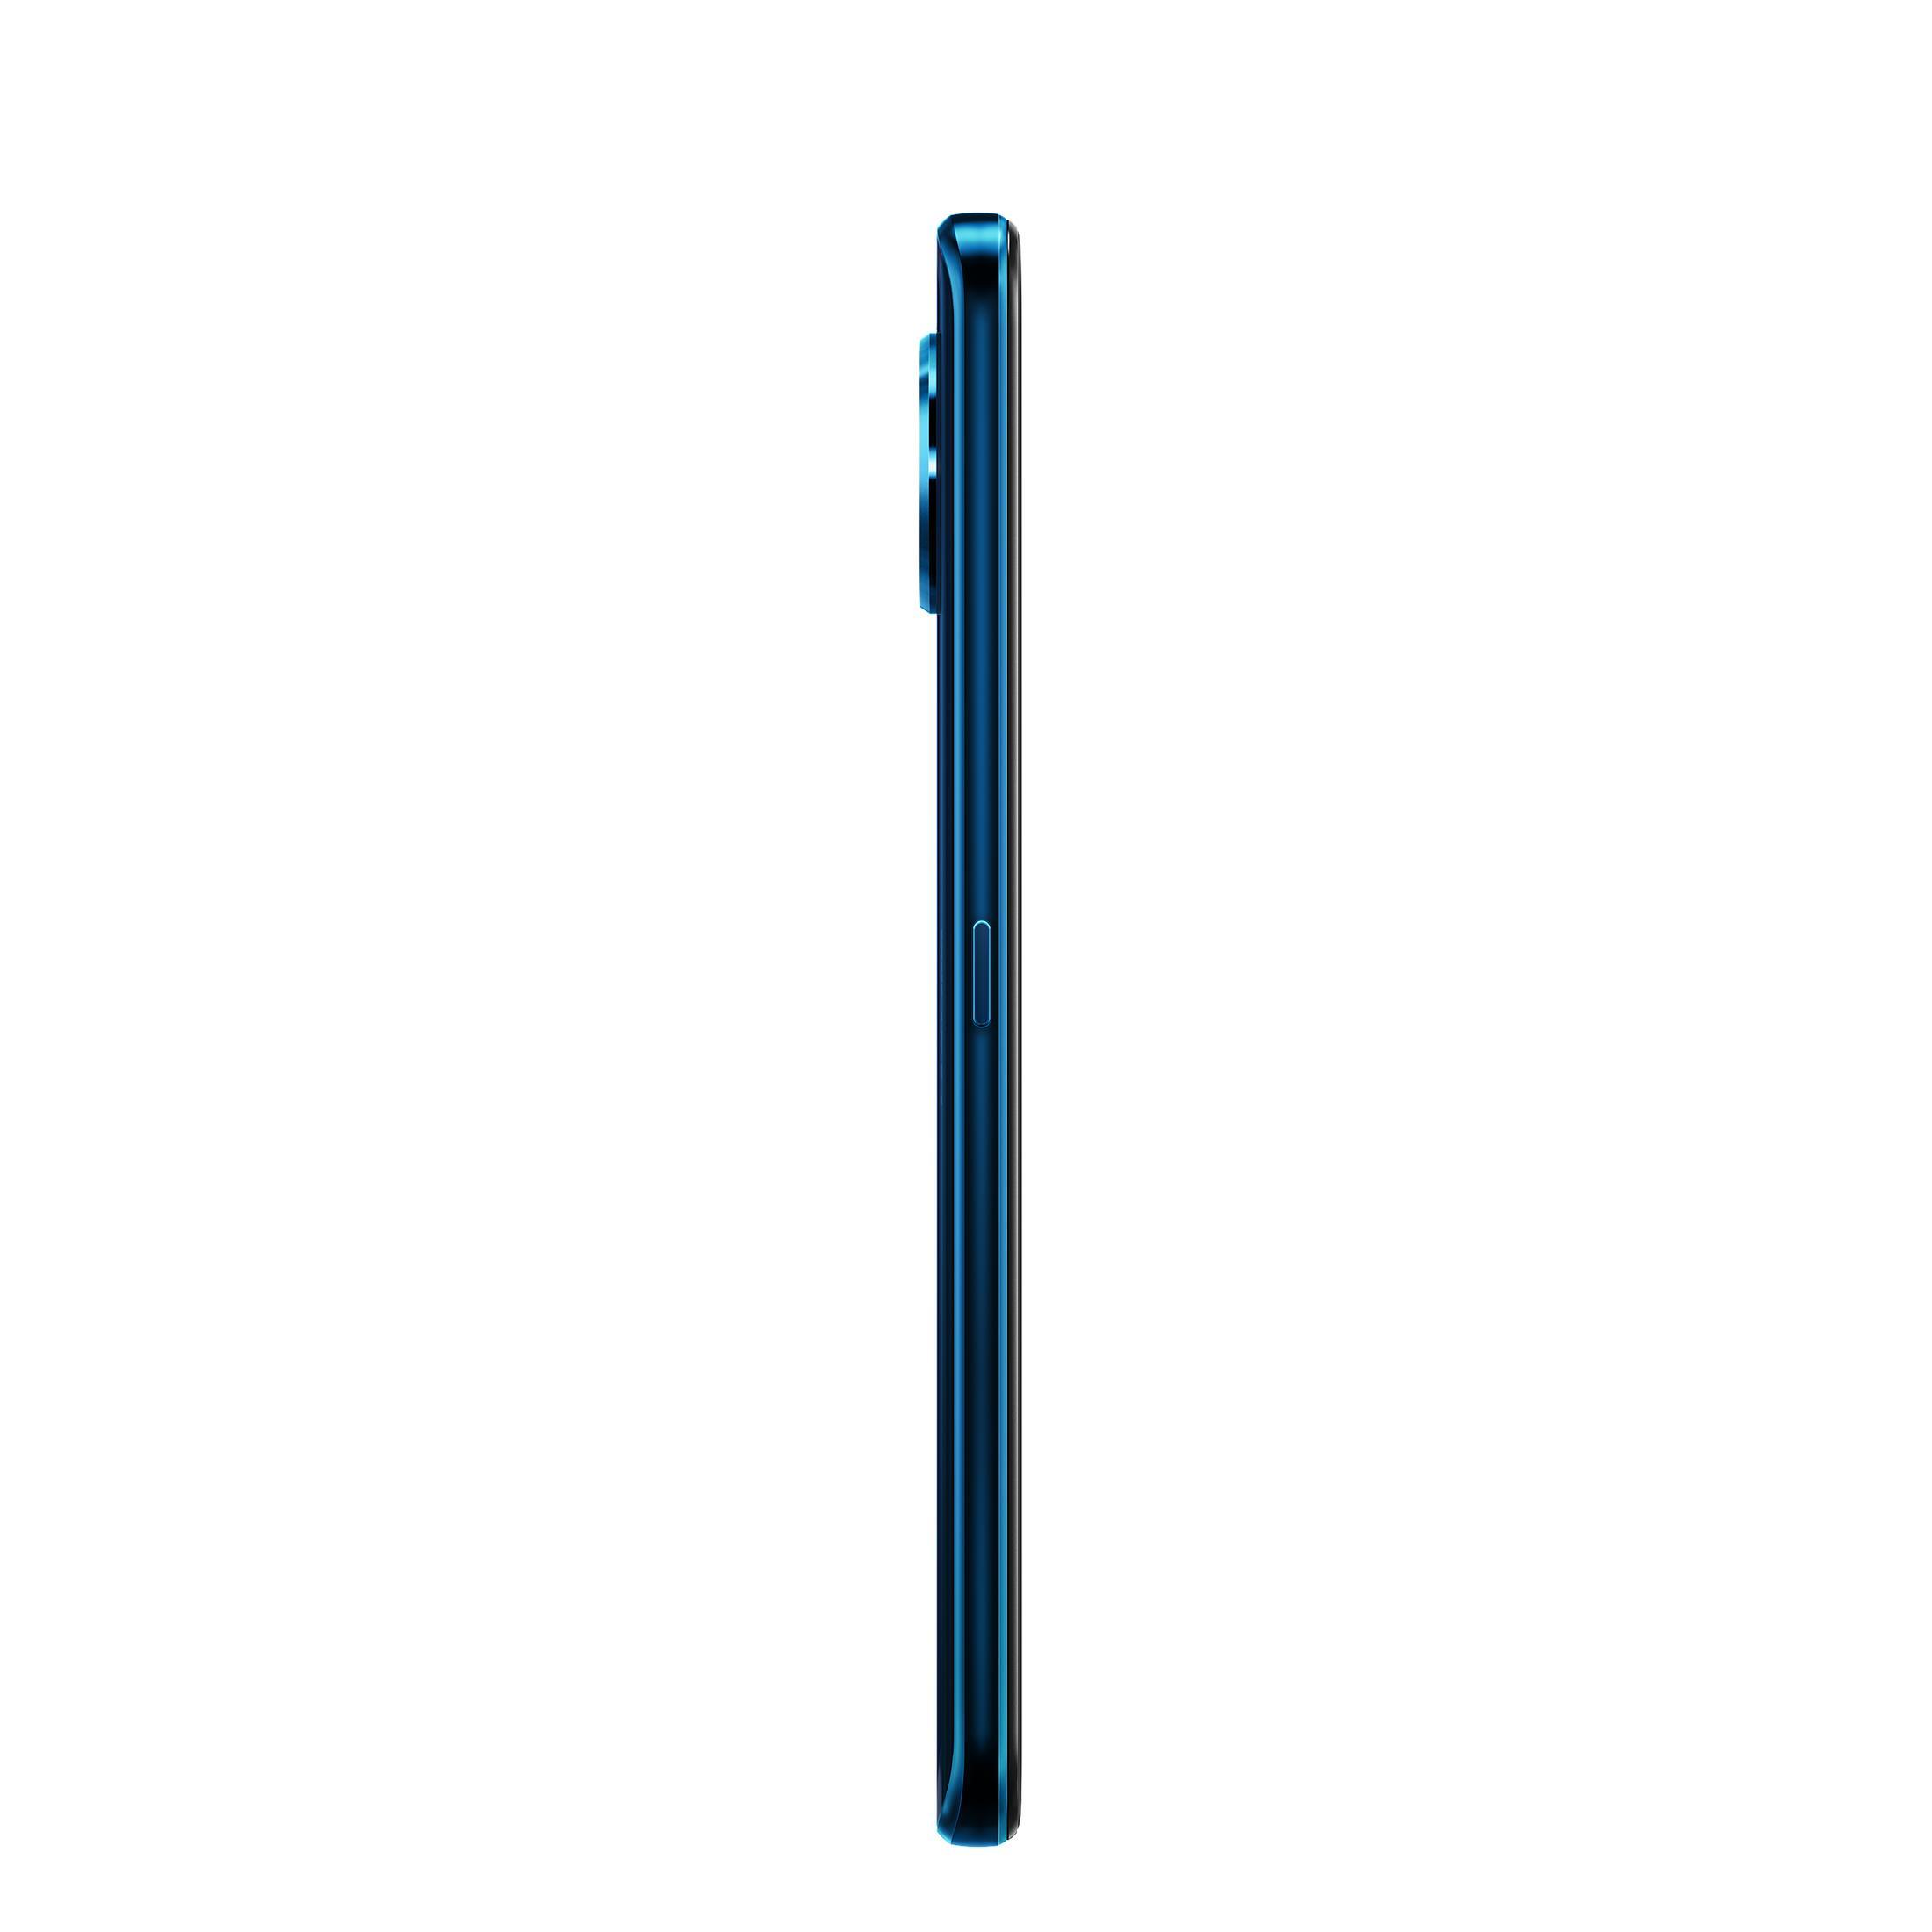 GB 8.3 B-Ware 128 SIM Blau Dual - blue NOKIA DS 128GB 5G